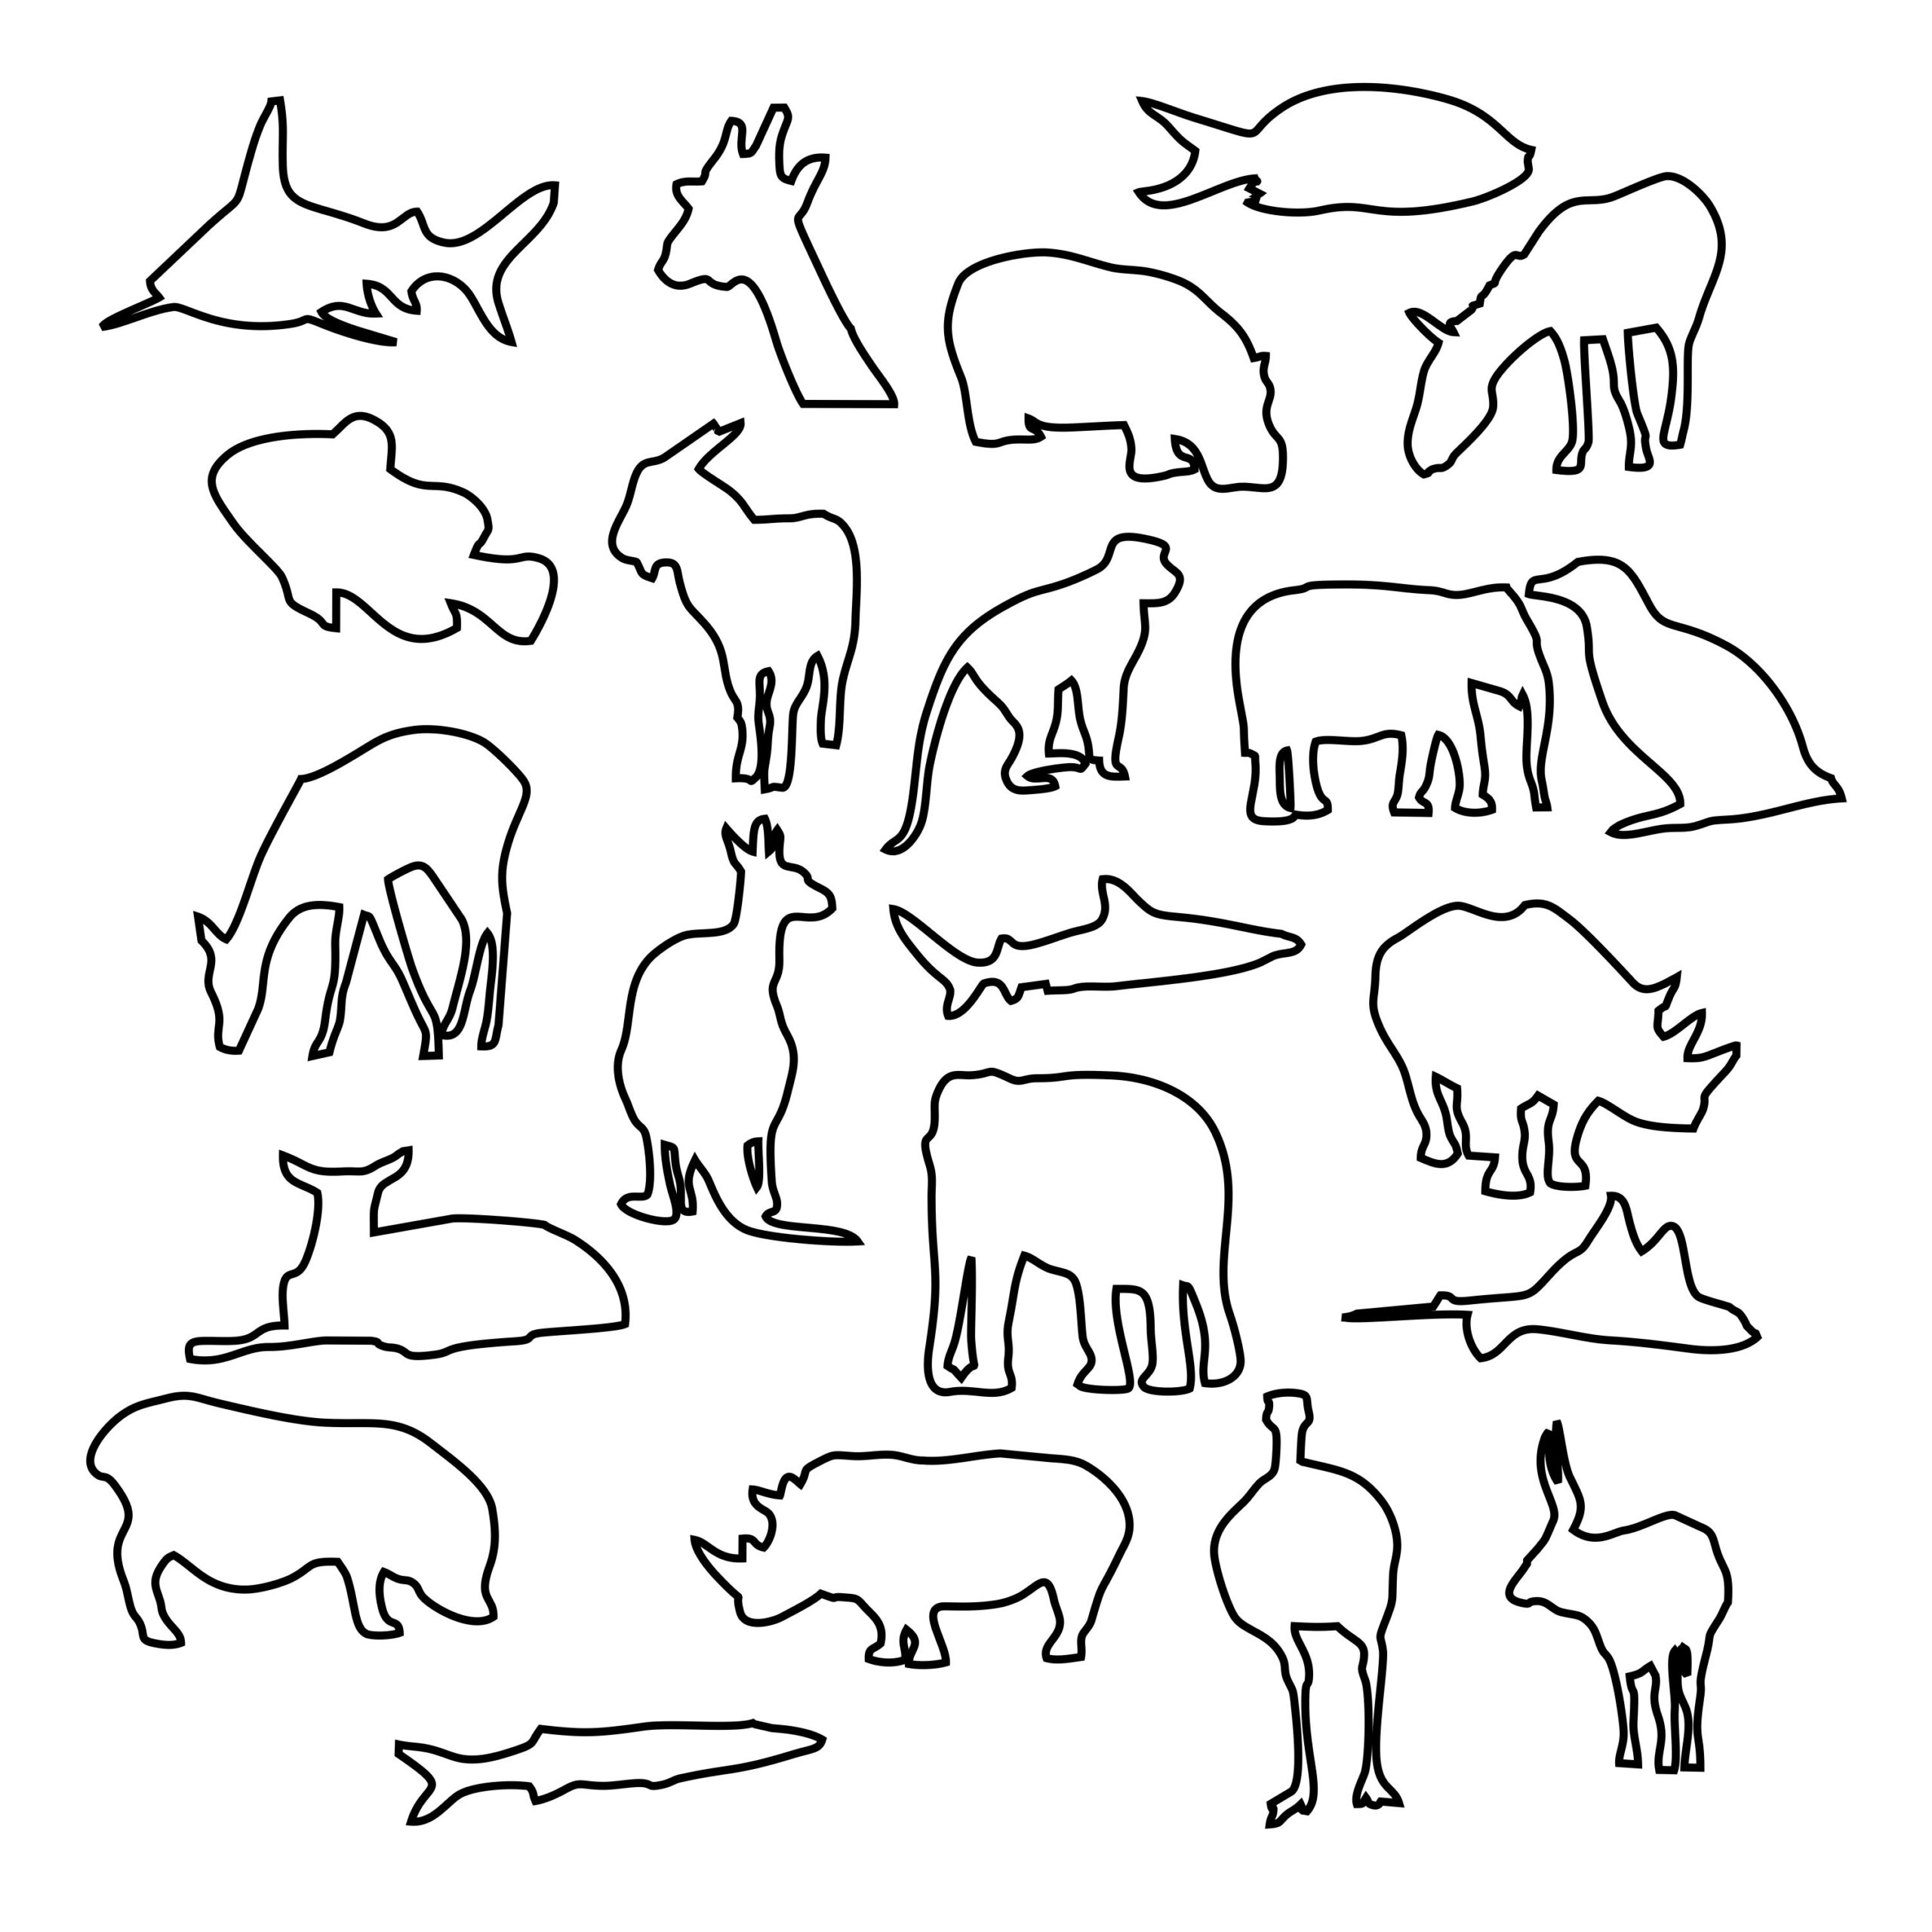 Animal vector Art icon images animal png black & white illustrator symbol template taxture jpg